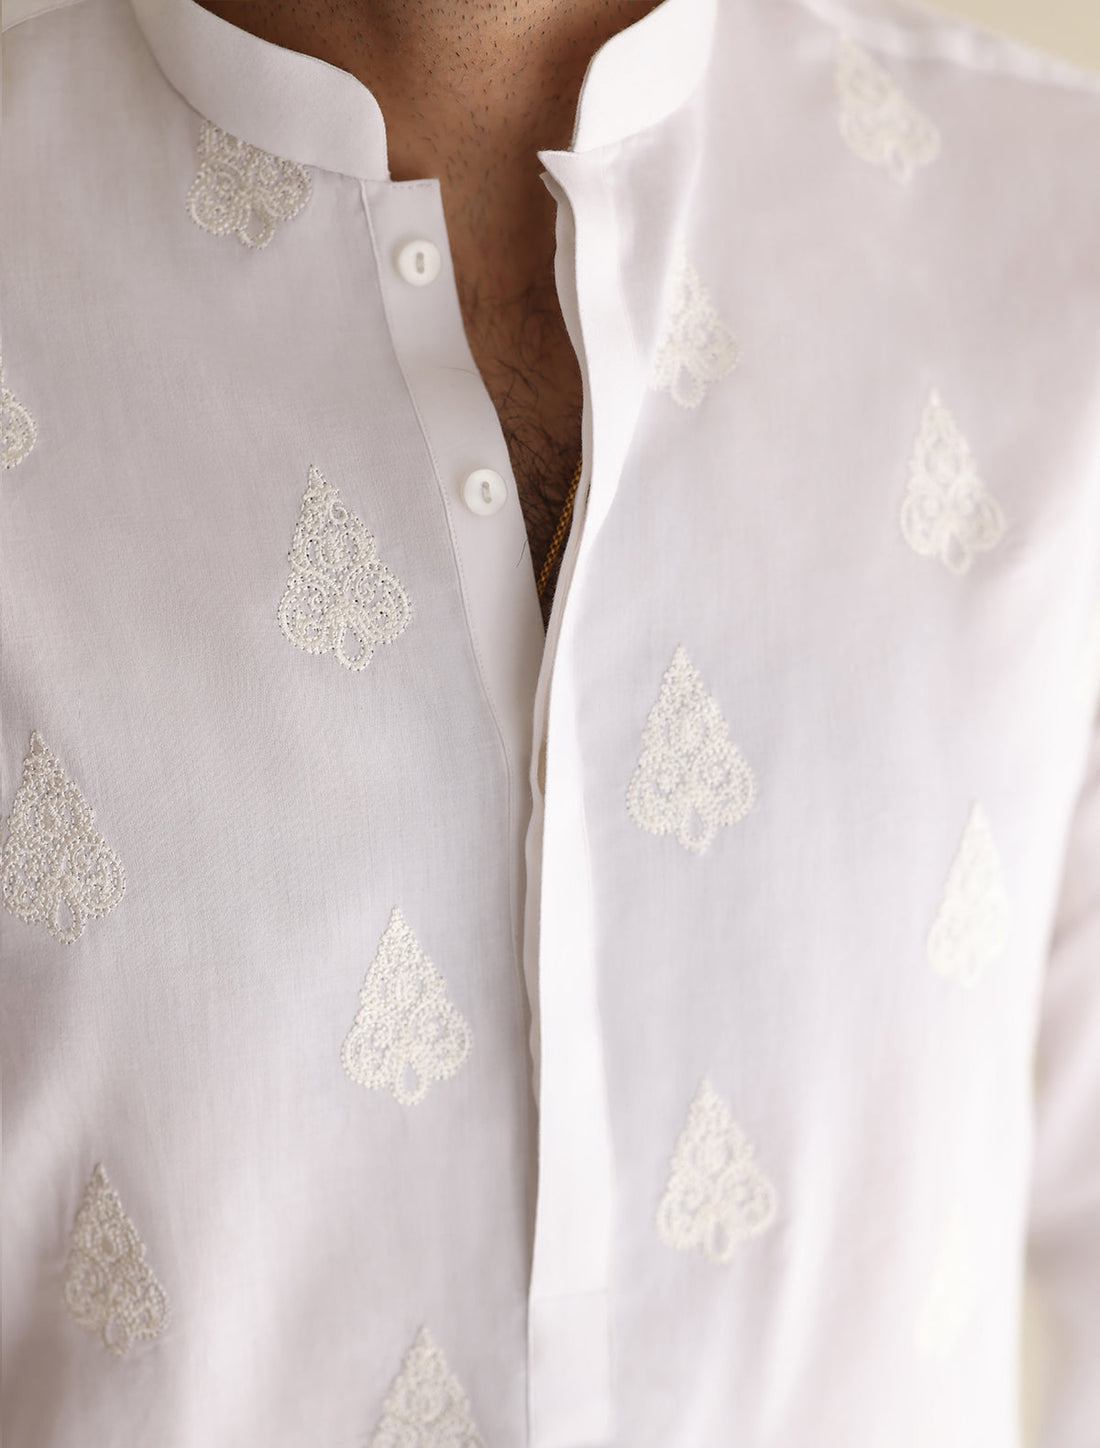 Pakistani Menswear | Ismail Farid - WHITE EMBROIDERED KURTA - Khanumjan  Pakistani Clothes and Designer Dresses in UK, USA 